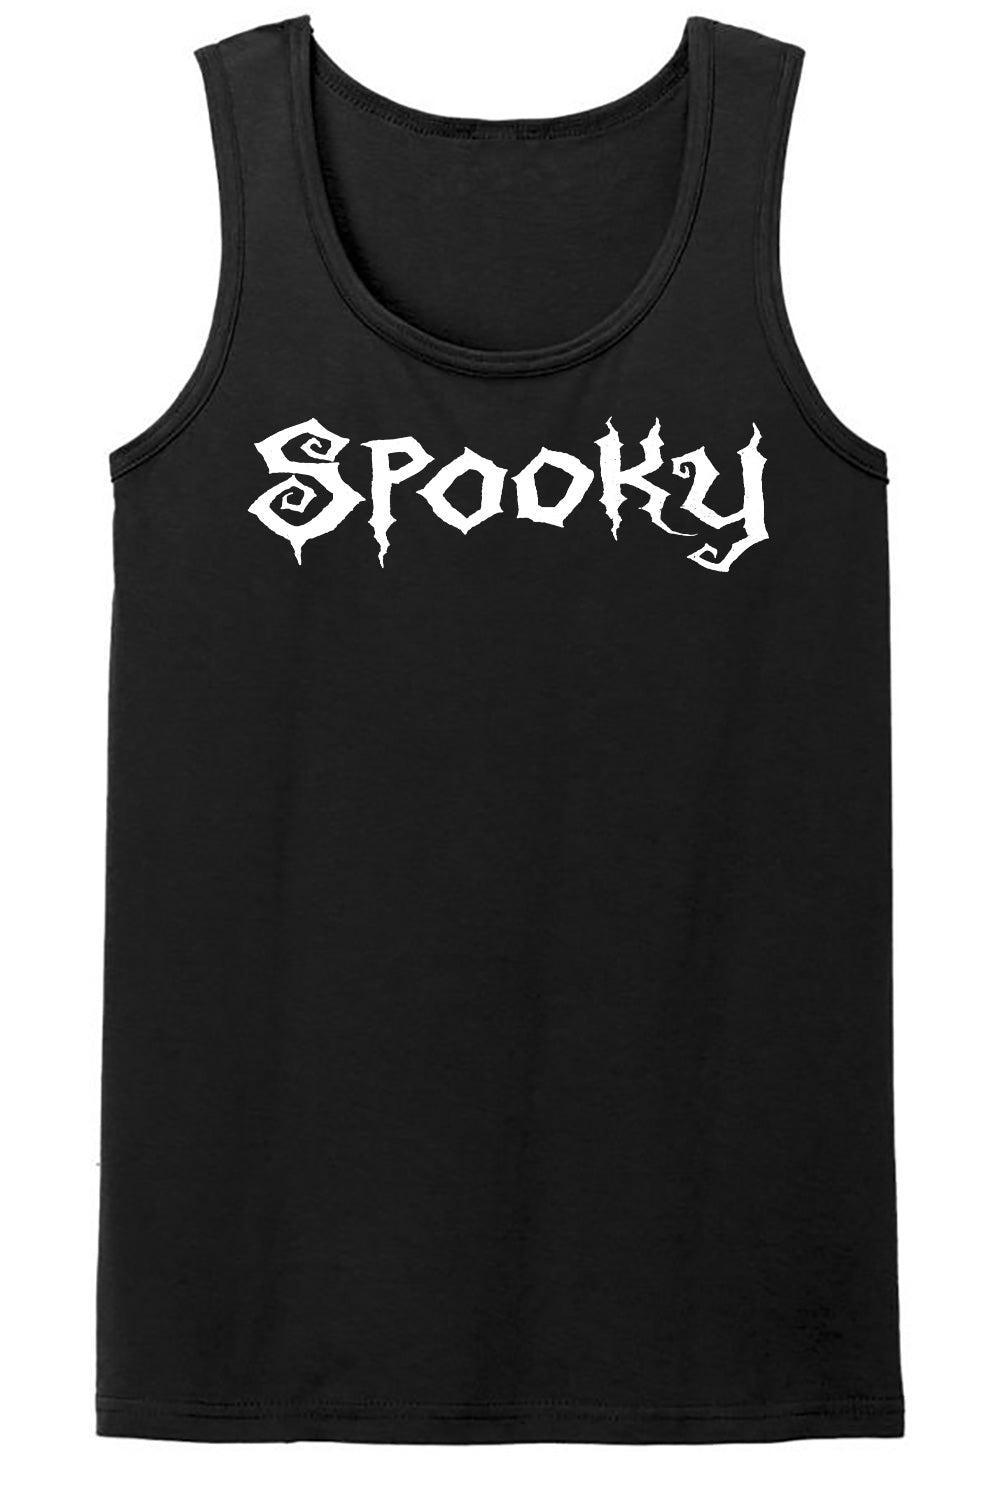 Spooky T-shirt